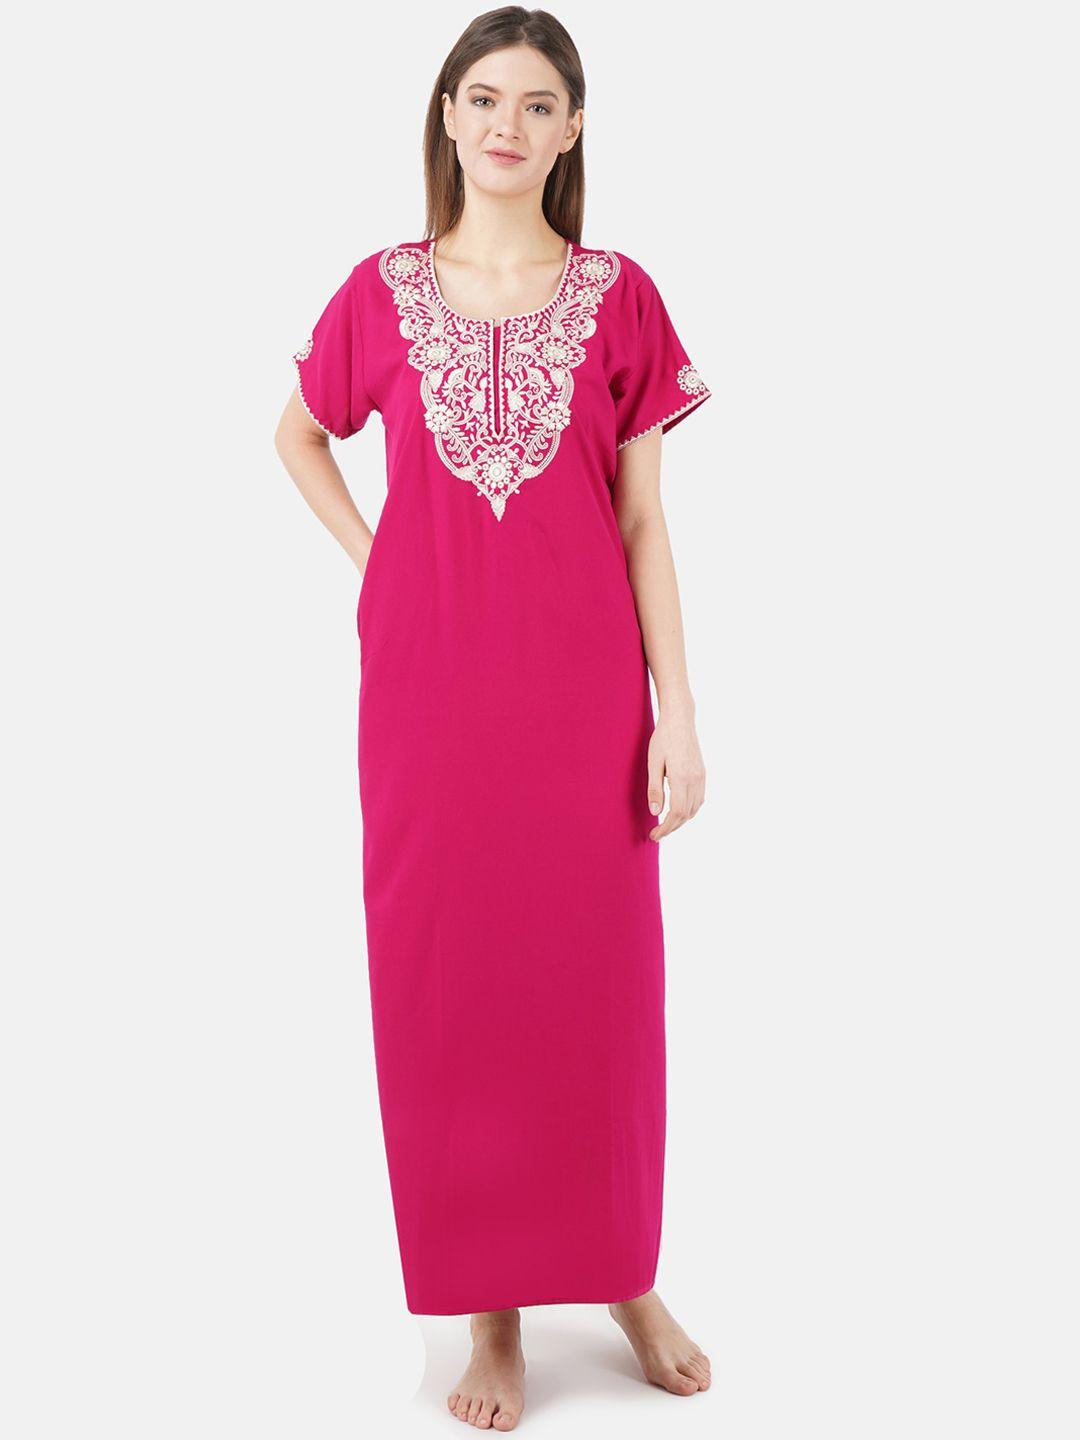 koi sleepwear pink & white embroidered cotton maxi nightdress